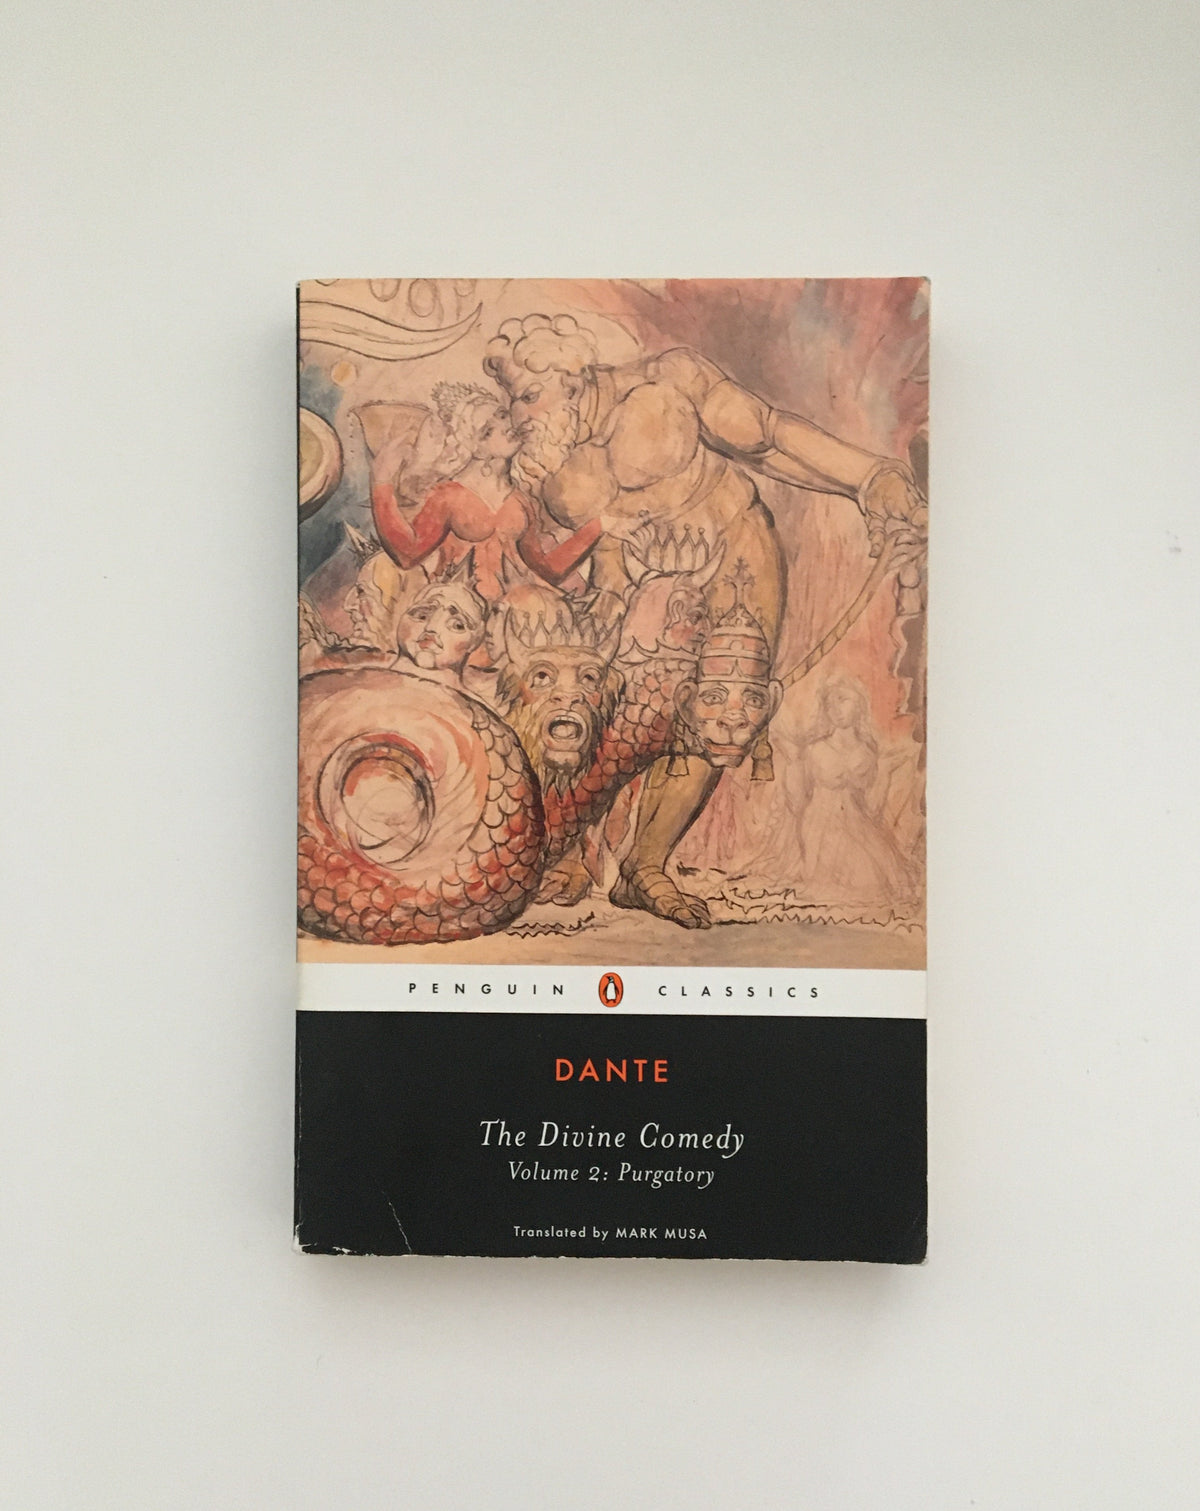 The Divine Comedy Volume 2: Purgatory by Dante